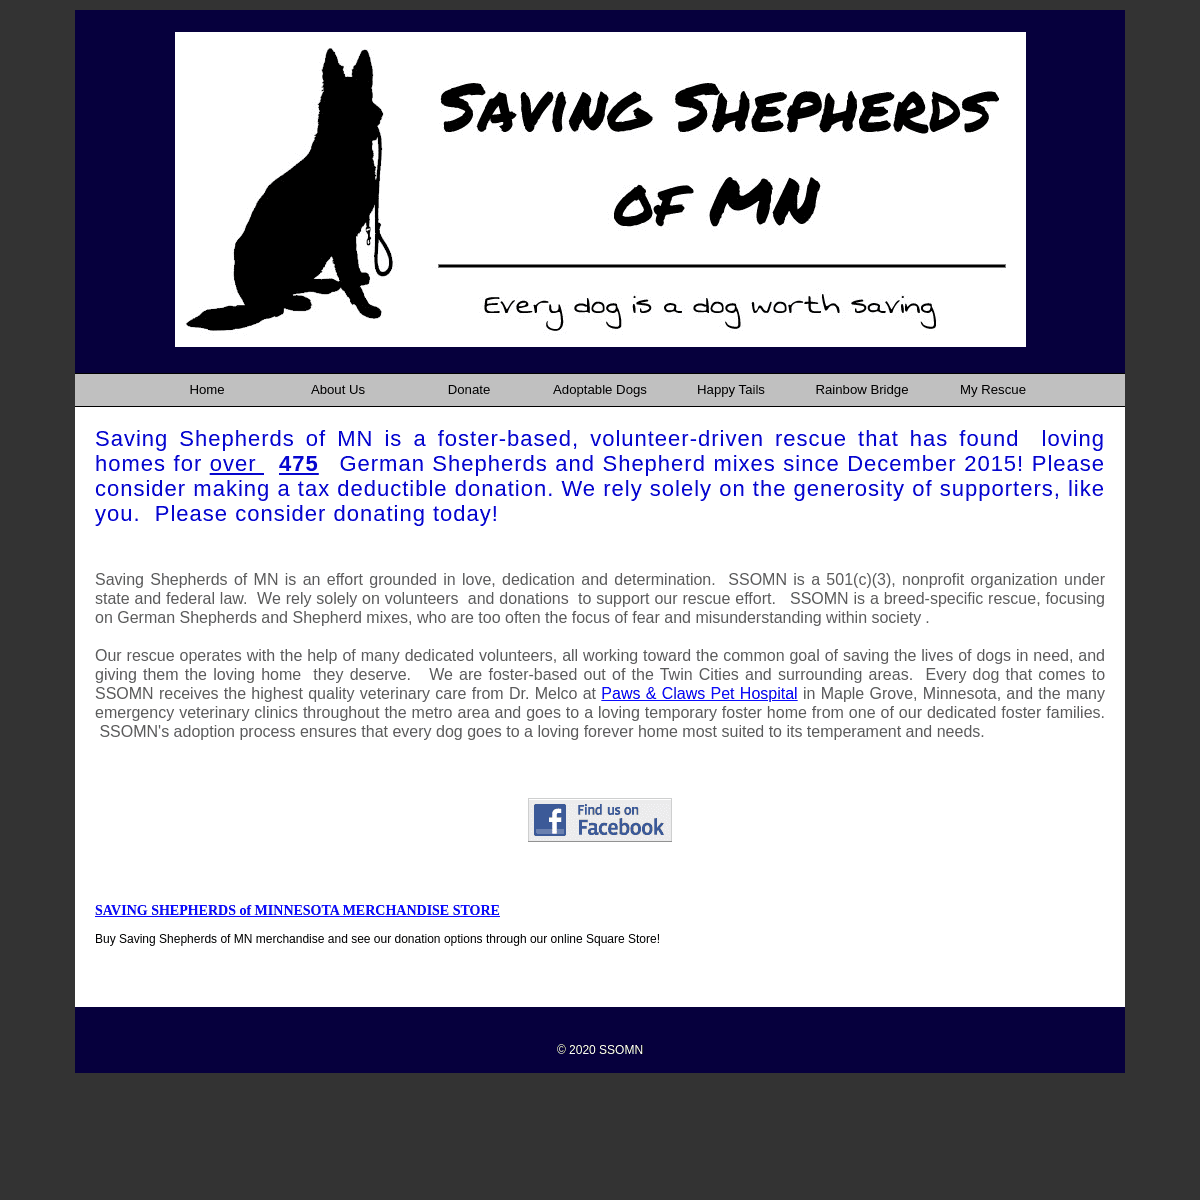 A complete backup of savingshepherdsofmn.org